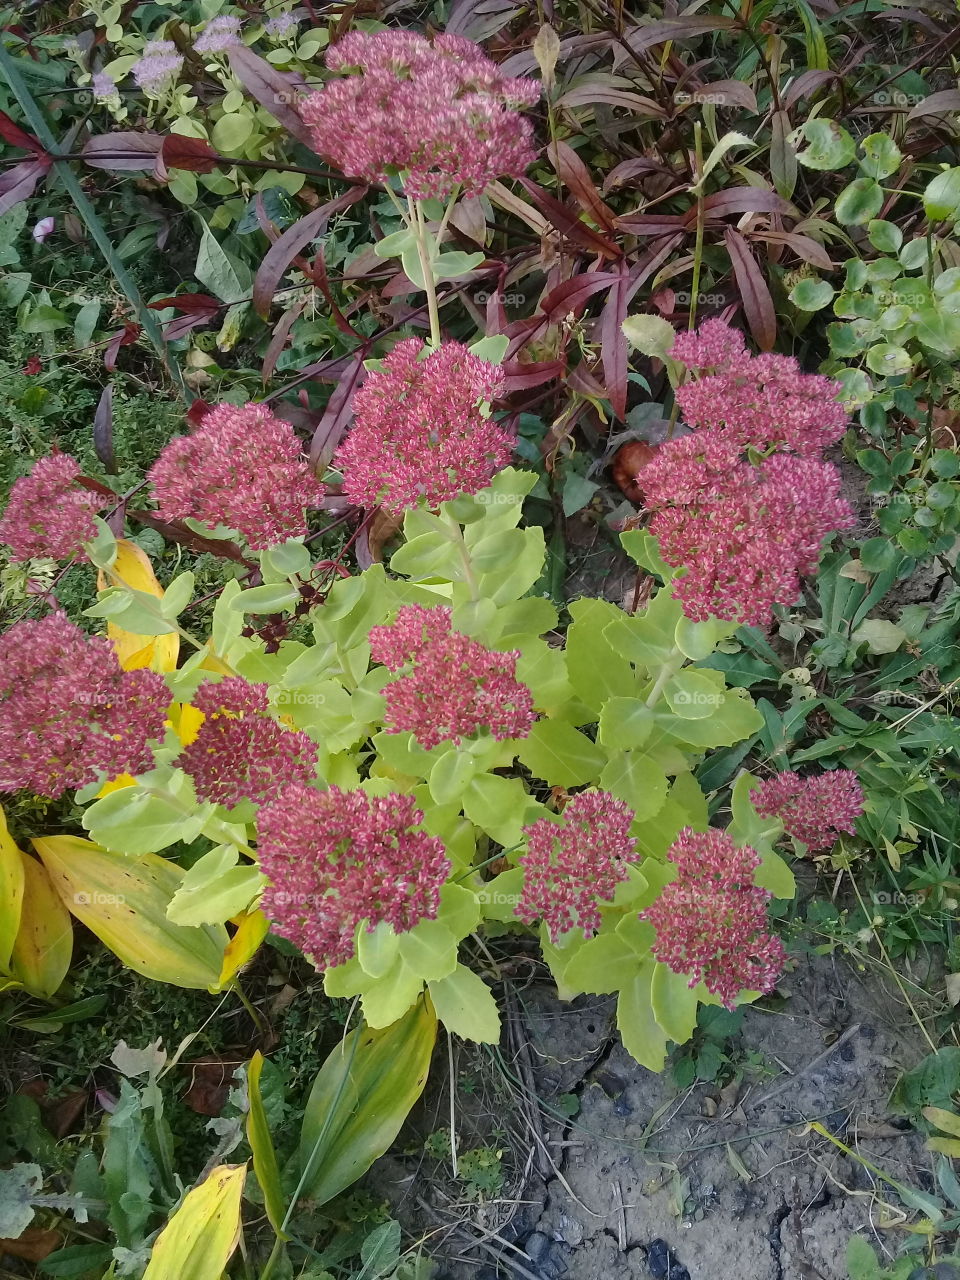 My flowers in autumn